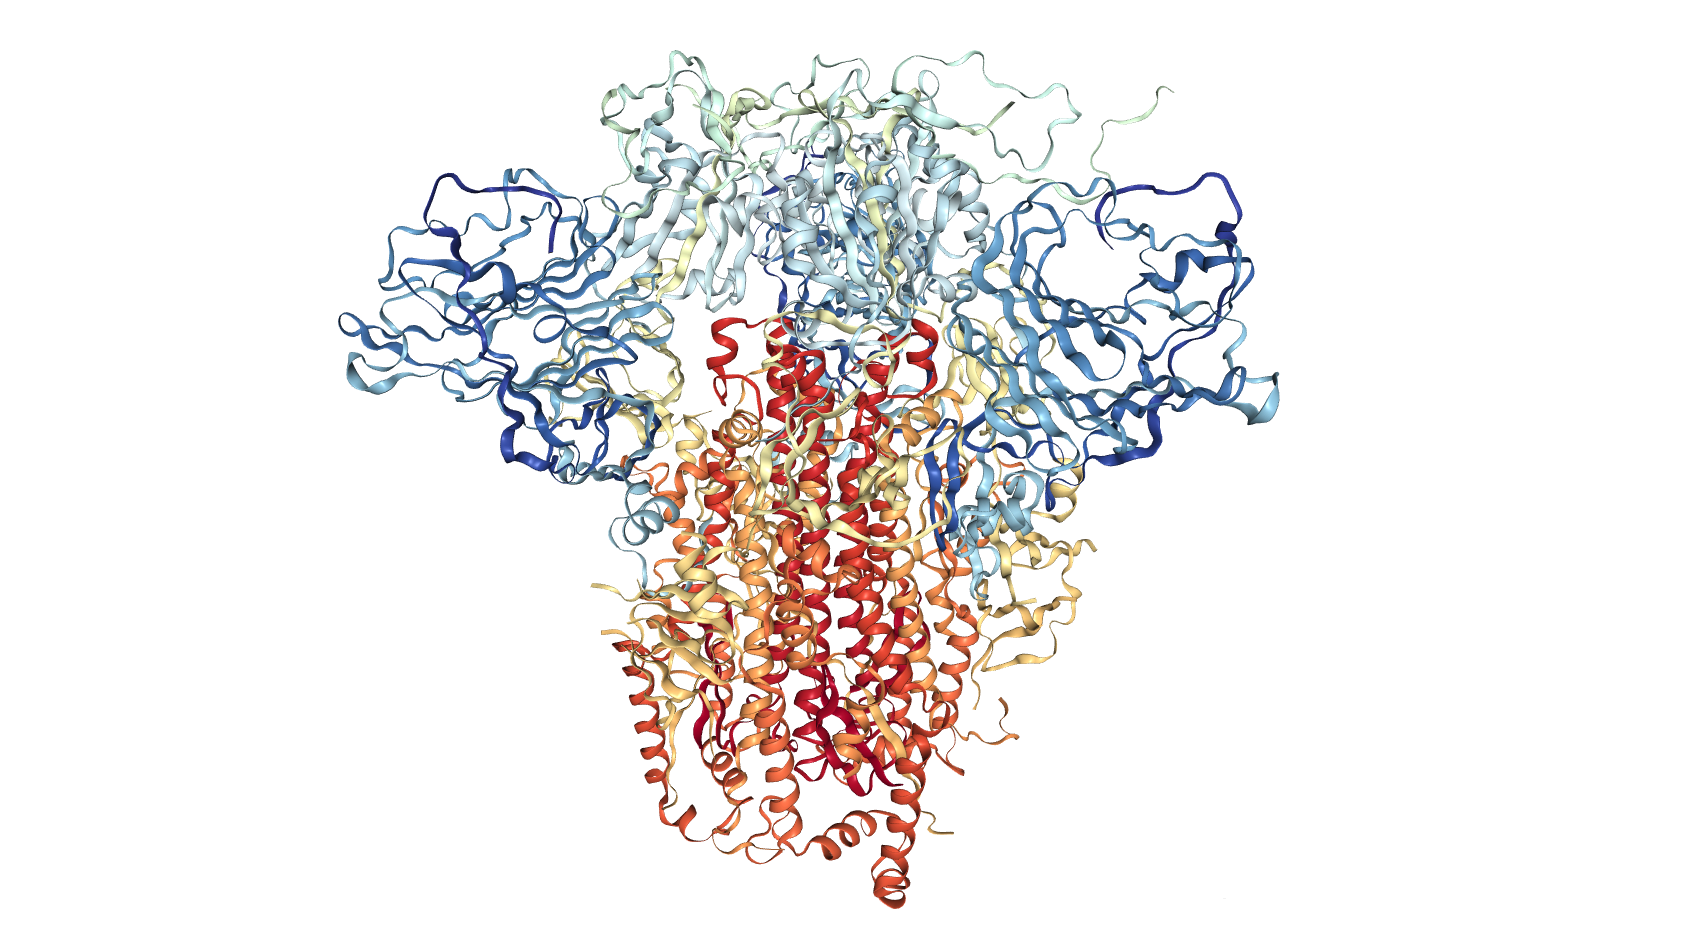 molecular structure of the coronavirus spike protein